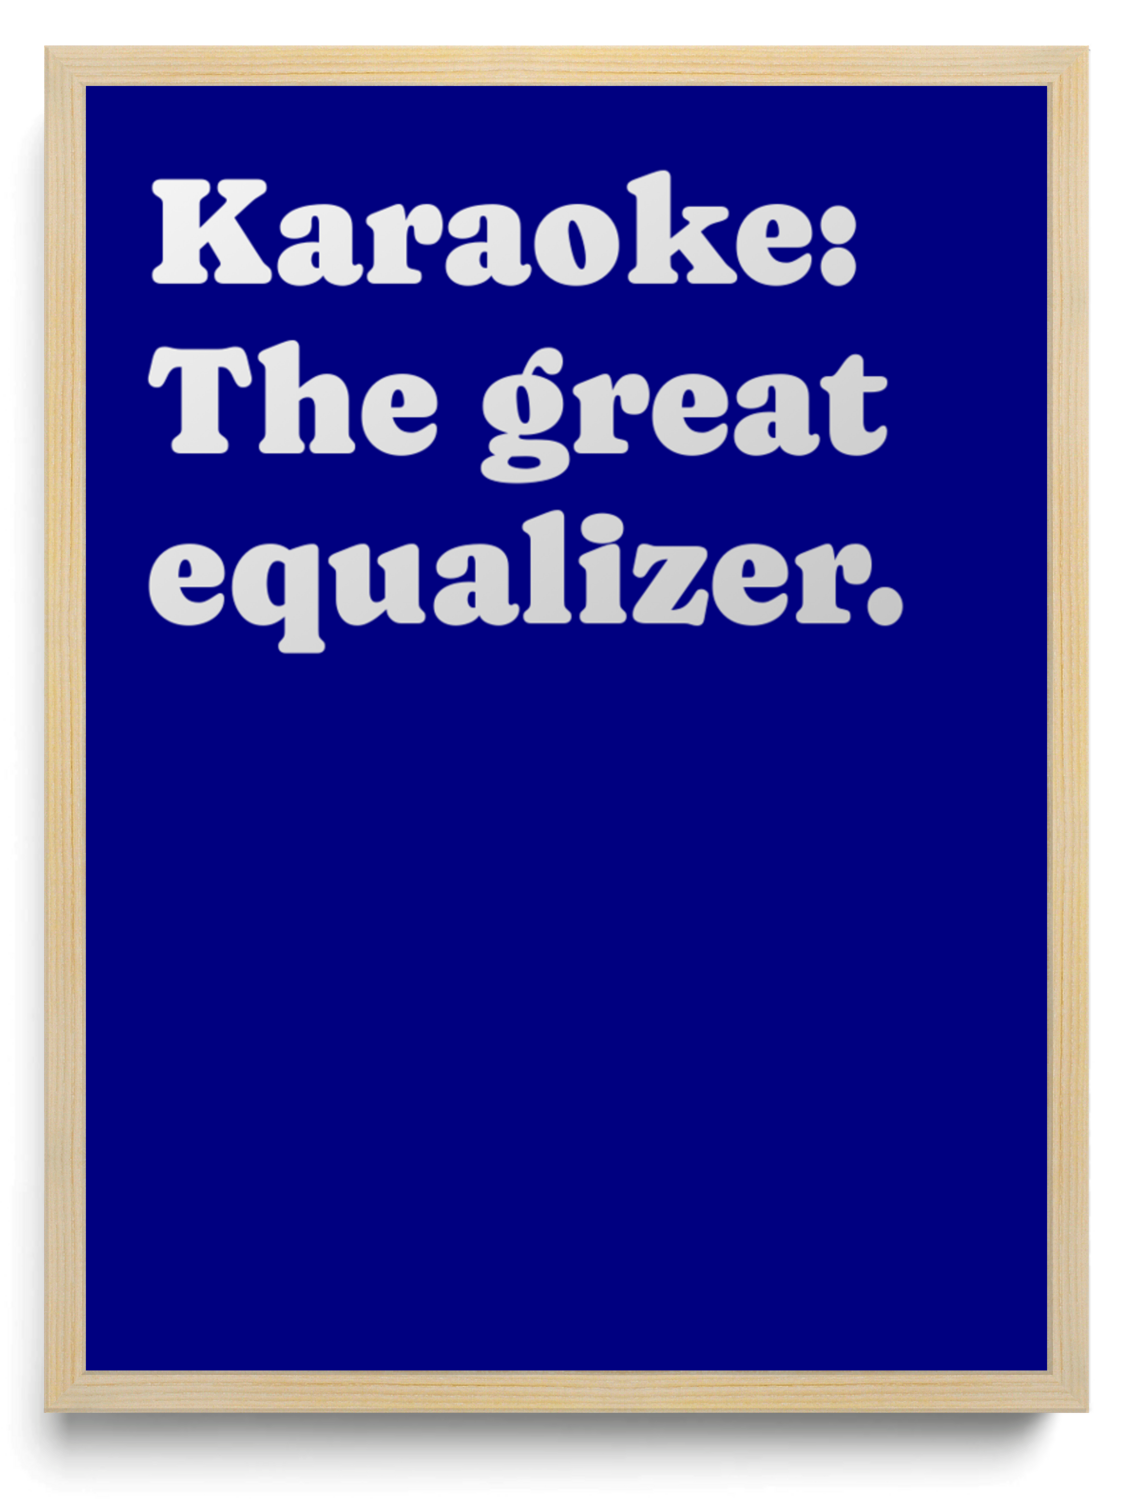 Karaoke The great equalizer framed typographic print